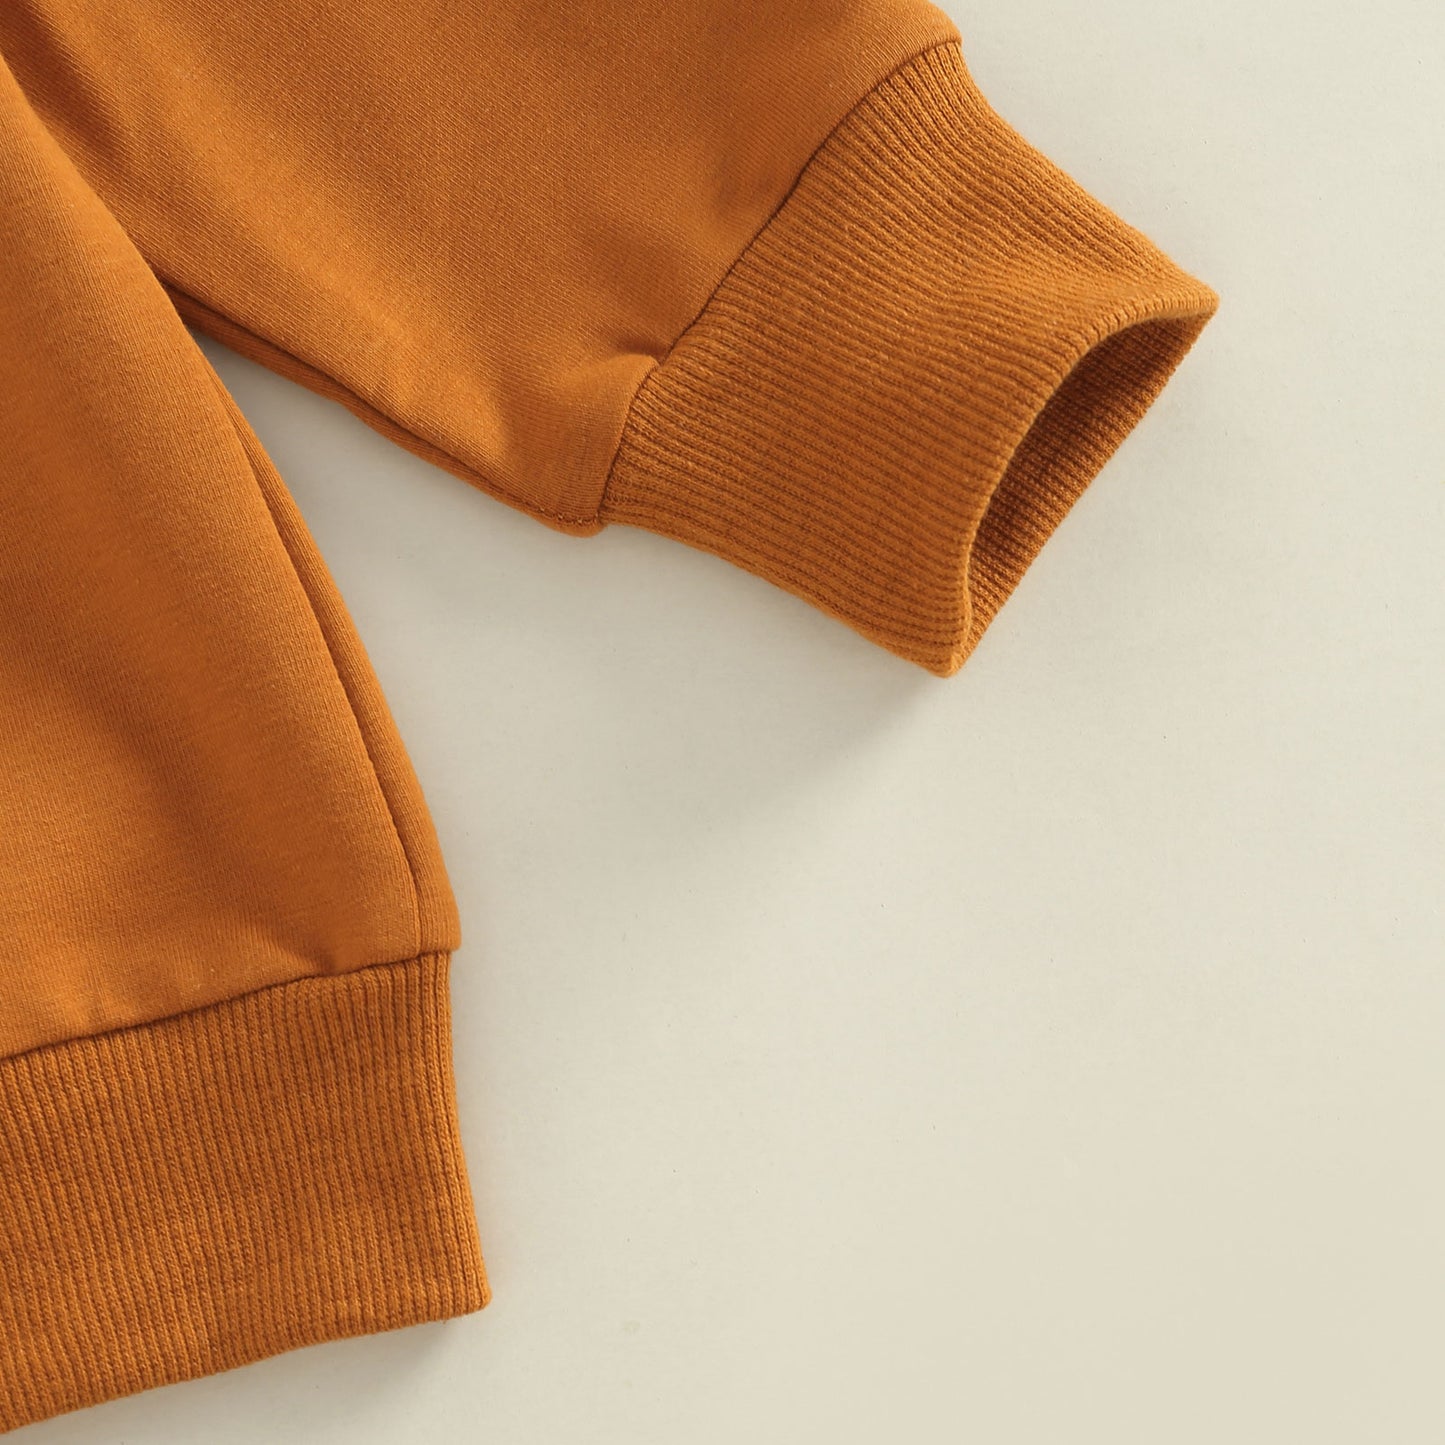 LIORAITIIN "The Pumpkin Patch Co." Toddler Long Sleeve Printed O-neck Sweatshirt